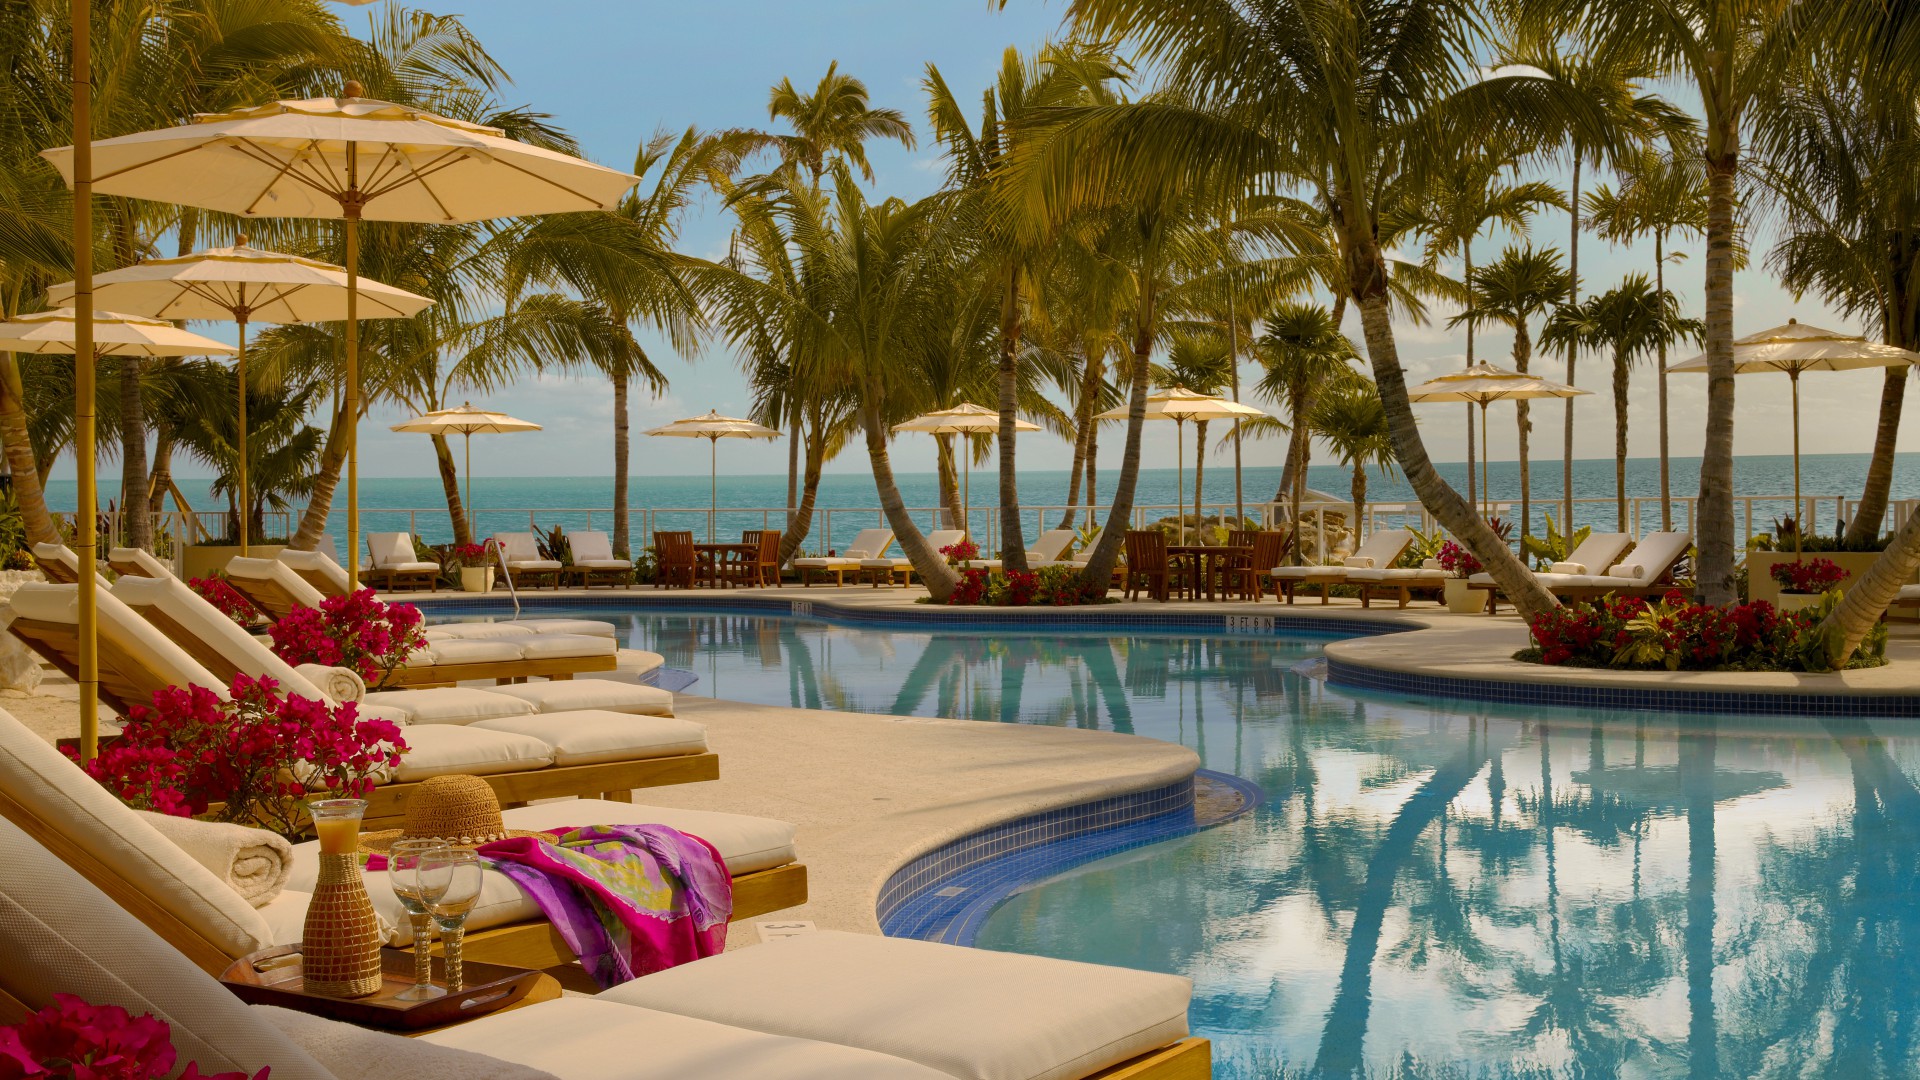 Cheeca Lodge & Spa, Islamorada, Florida, Best Hotels of 2017, tourism, travel, resort, vacation, pool (horizontal)